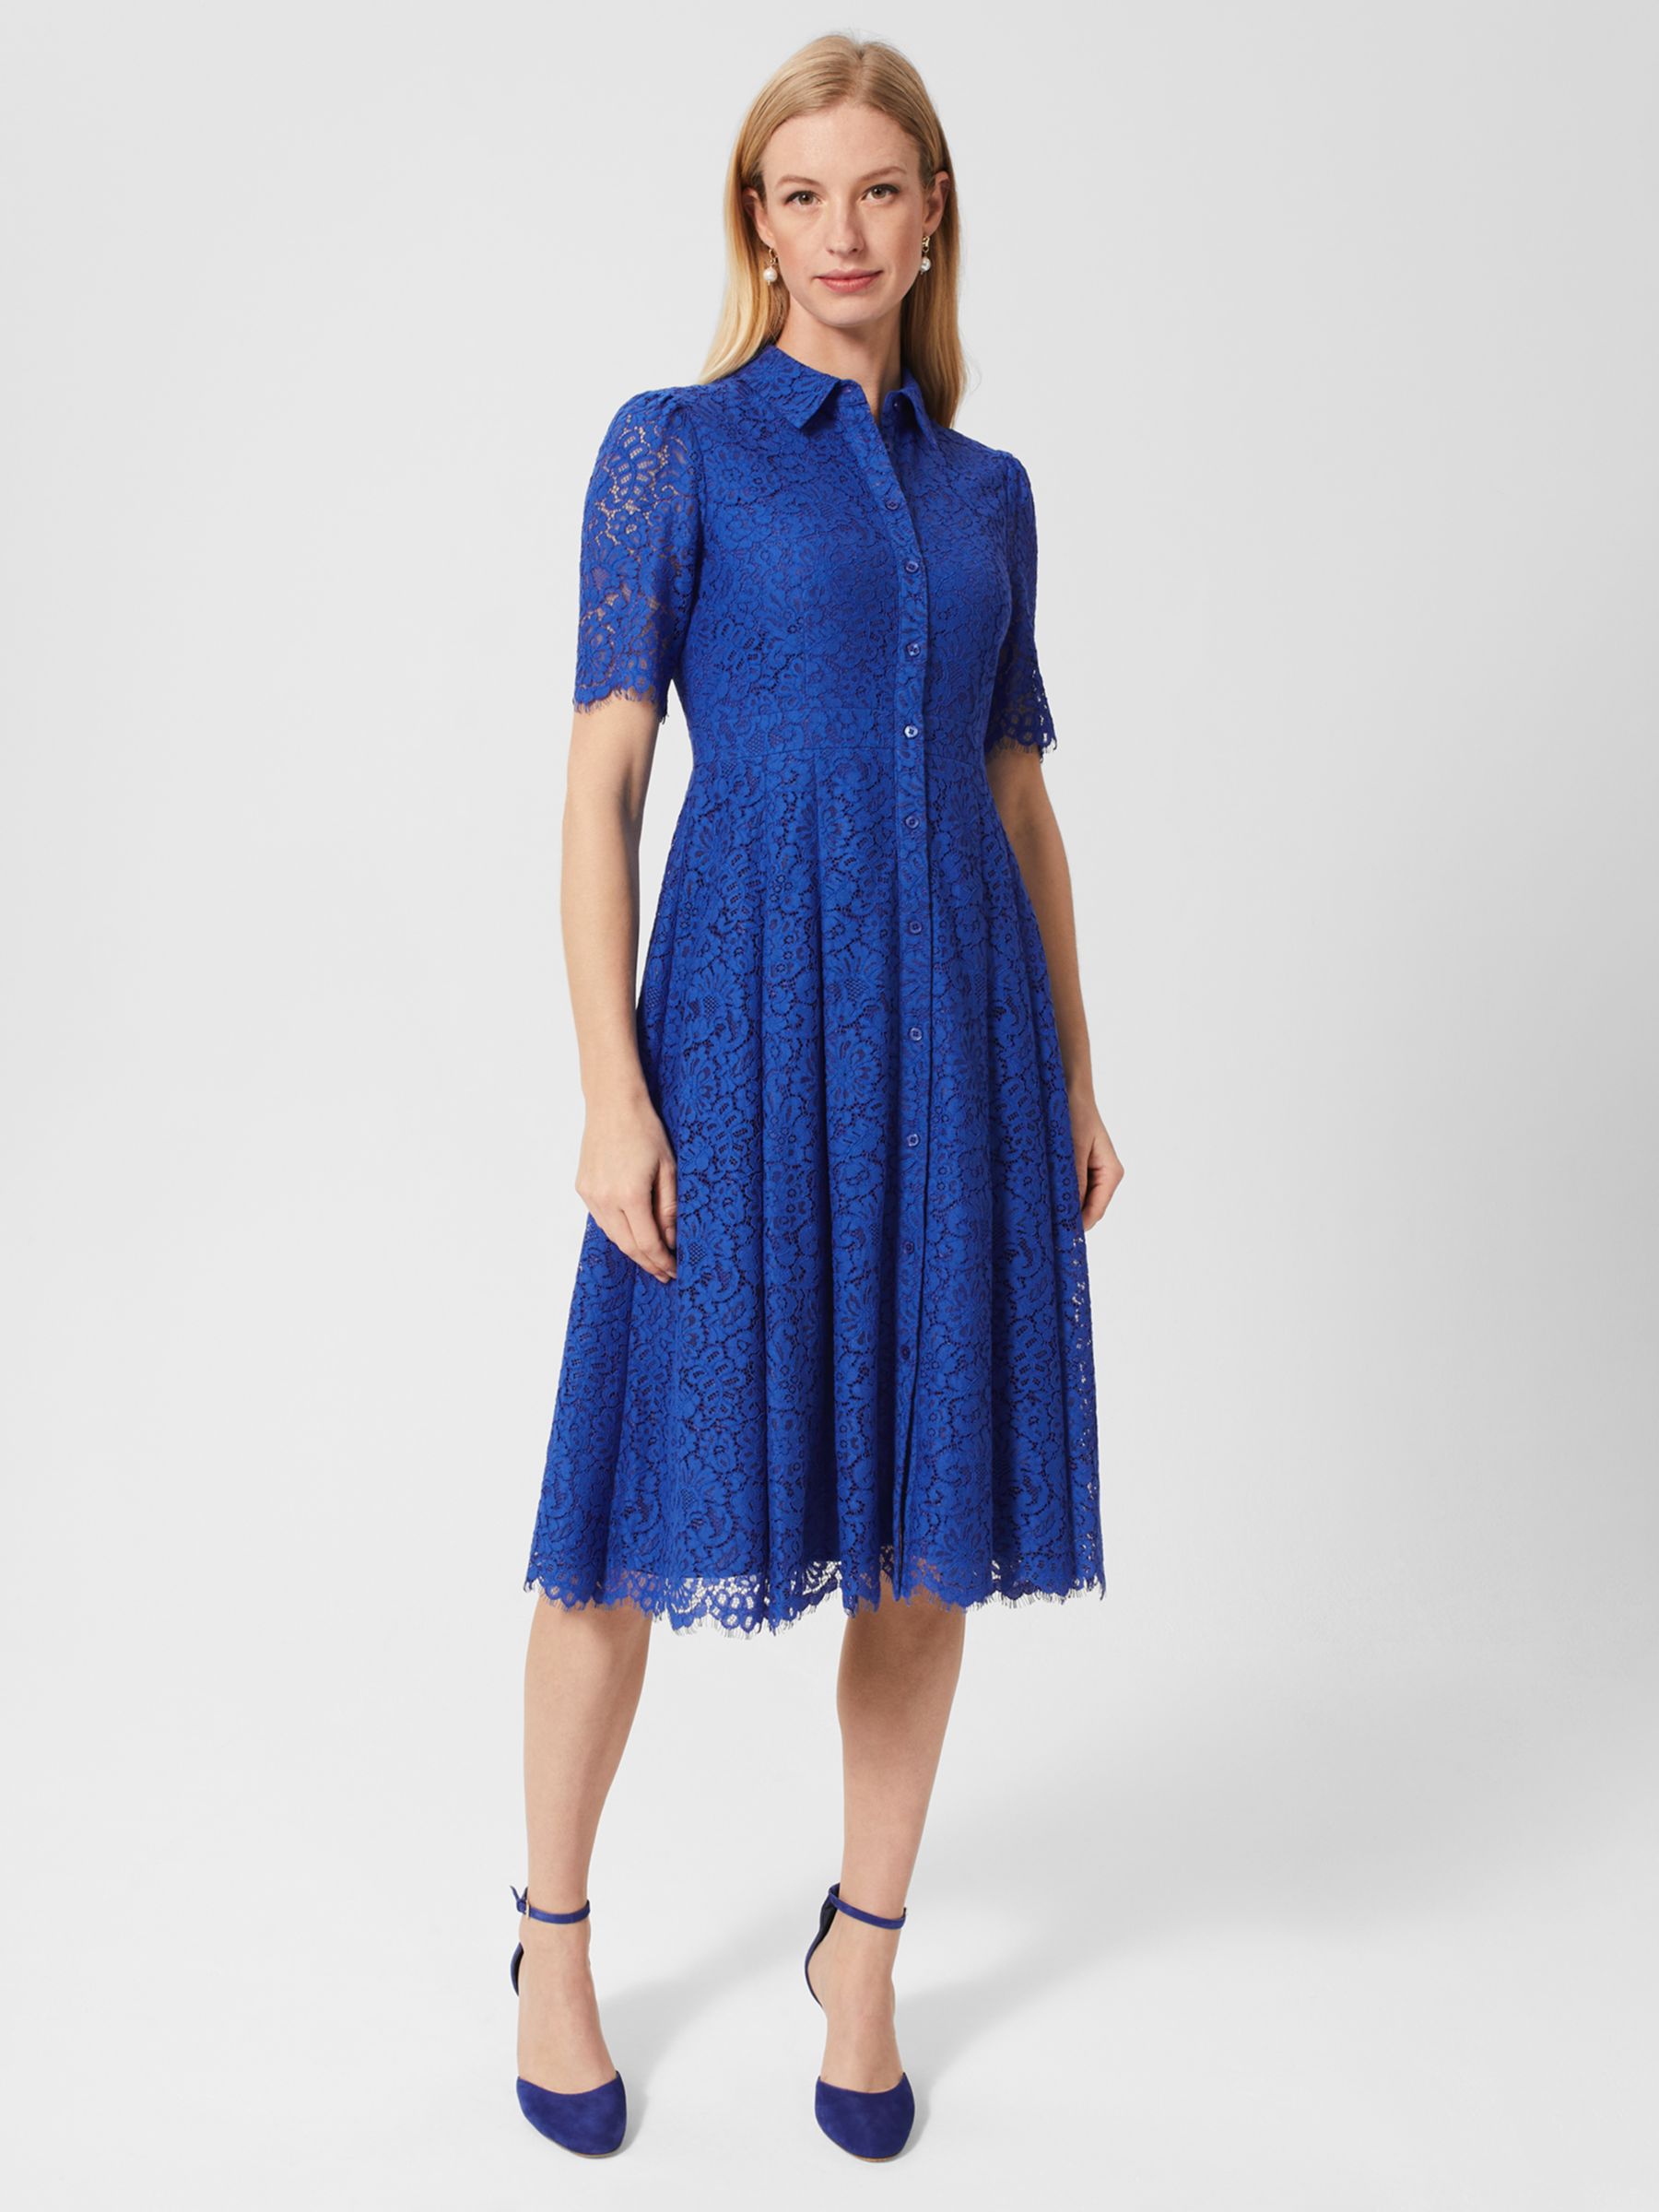 Hobbs Rebecca Lace Shirt Dress, Cobalt Blue at John Lewis & Partners